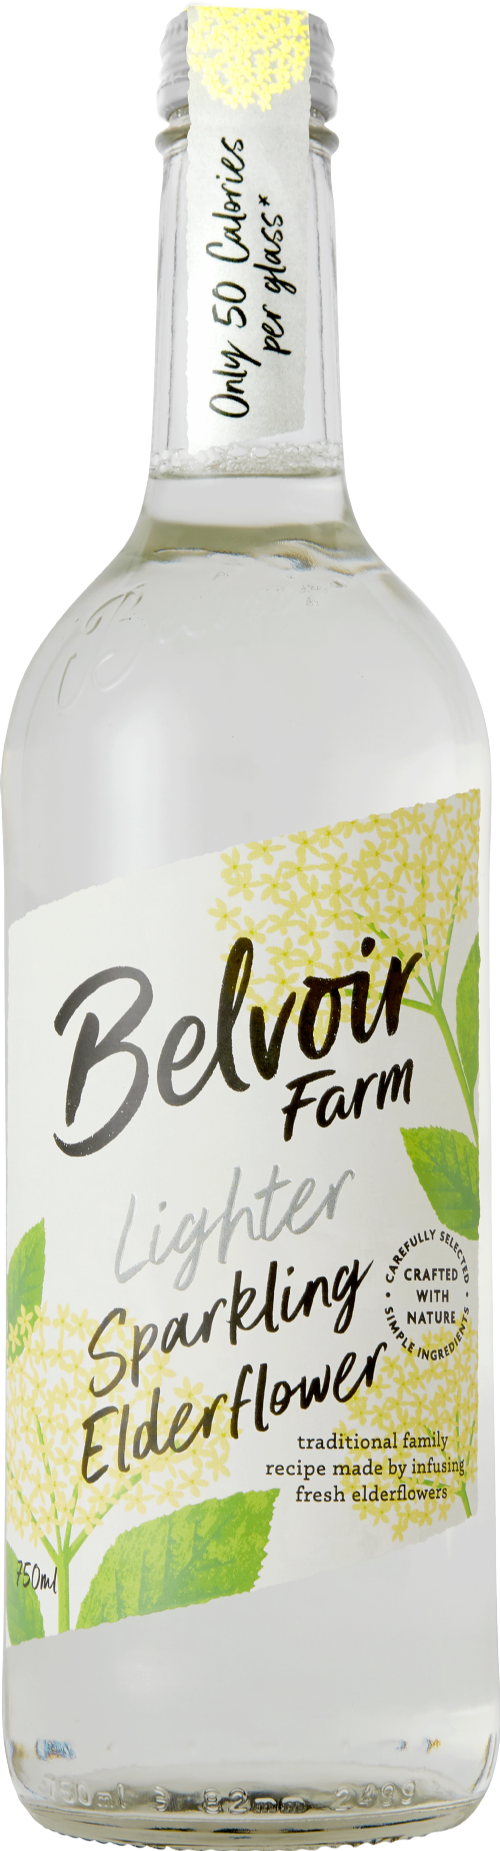 BELVOIR Lighter Sparkling Elderflower 75cl